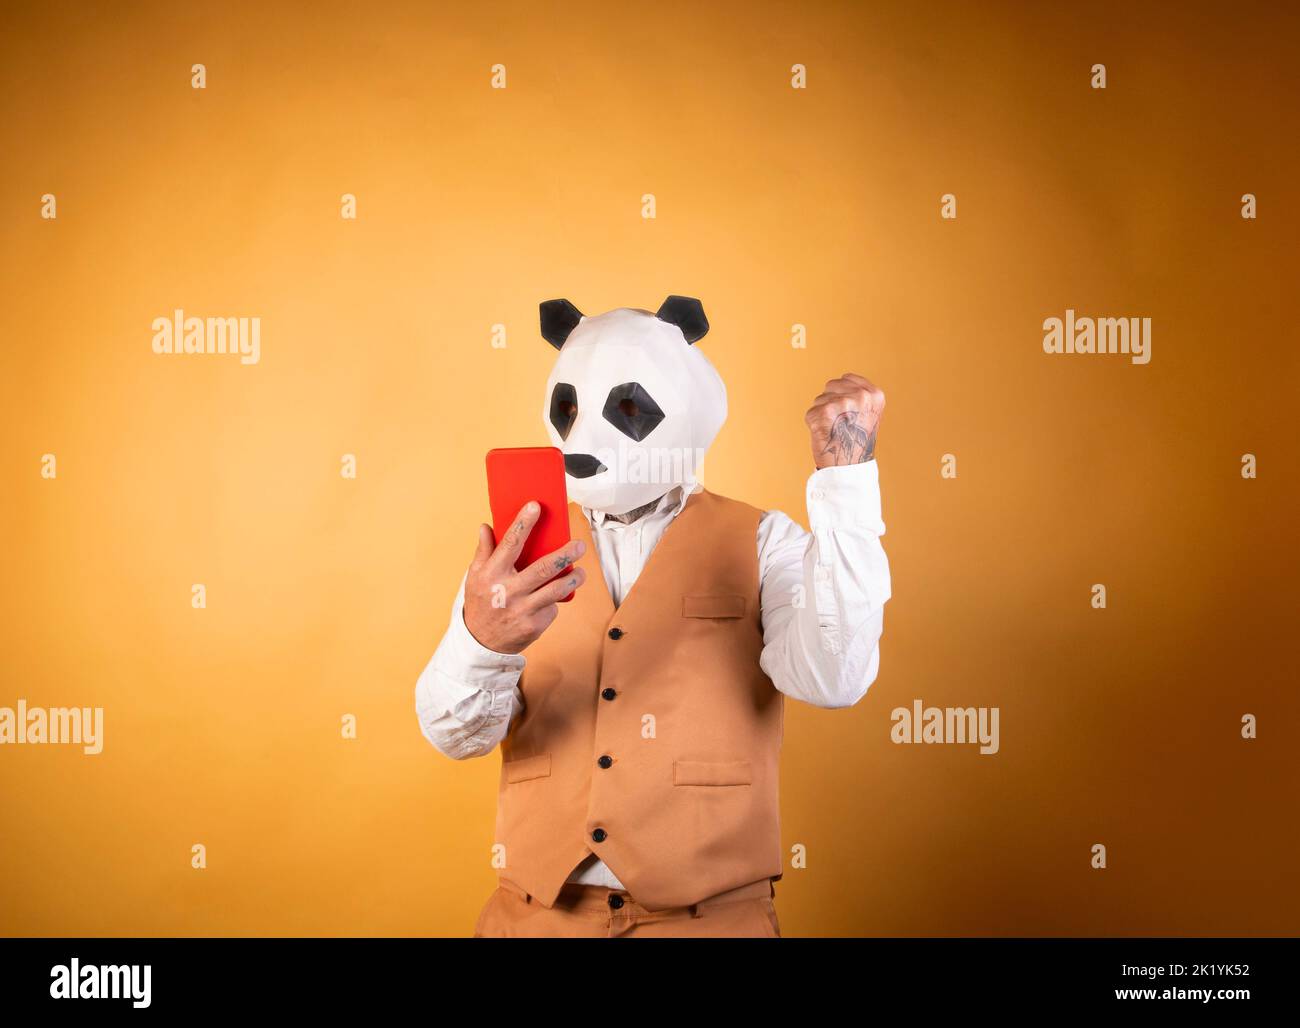 Man in panda bear mask on yellow background using smartphone. Stock Photo